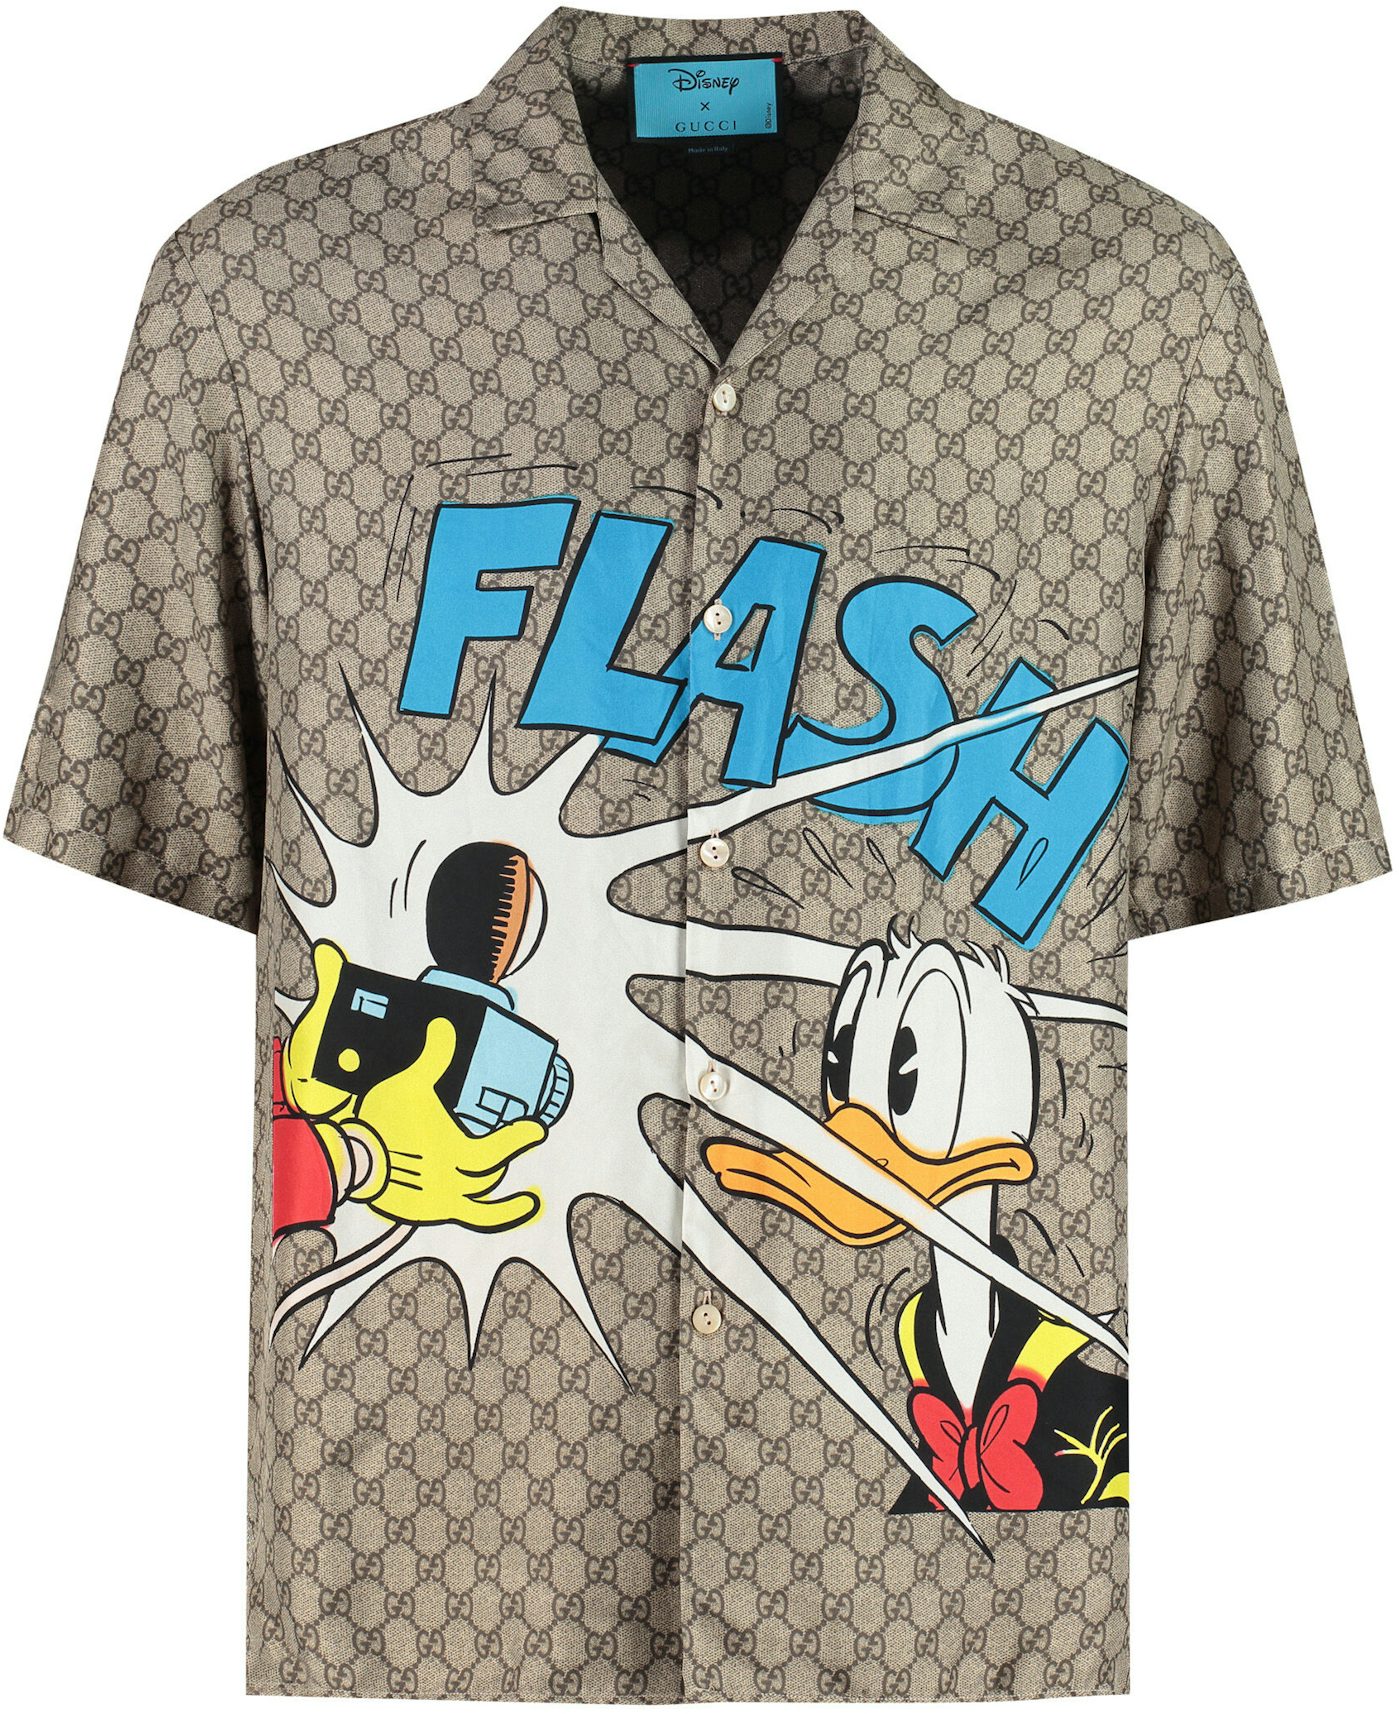 Gucci Black Disney Edition Donald Duck Flash T-Shirt Gucci